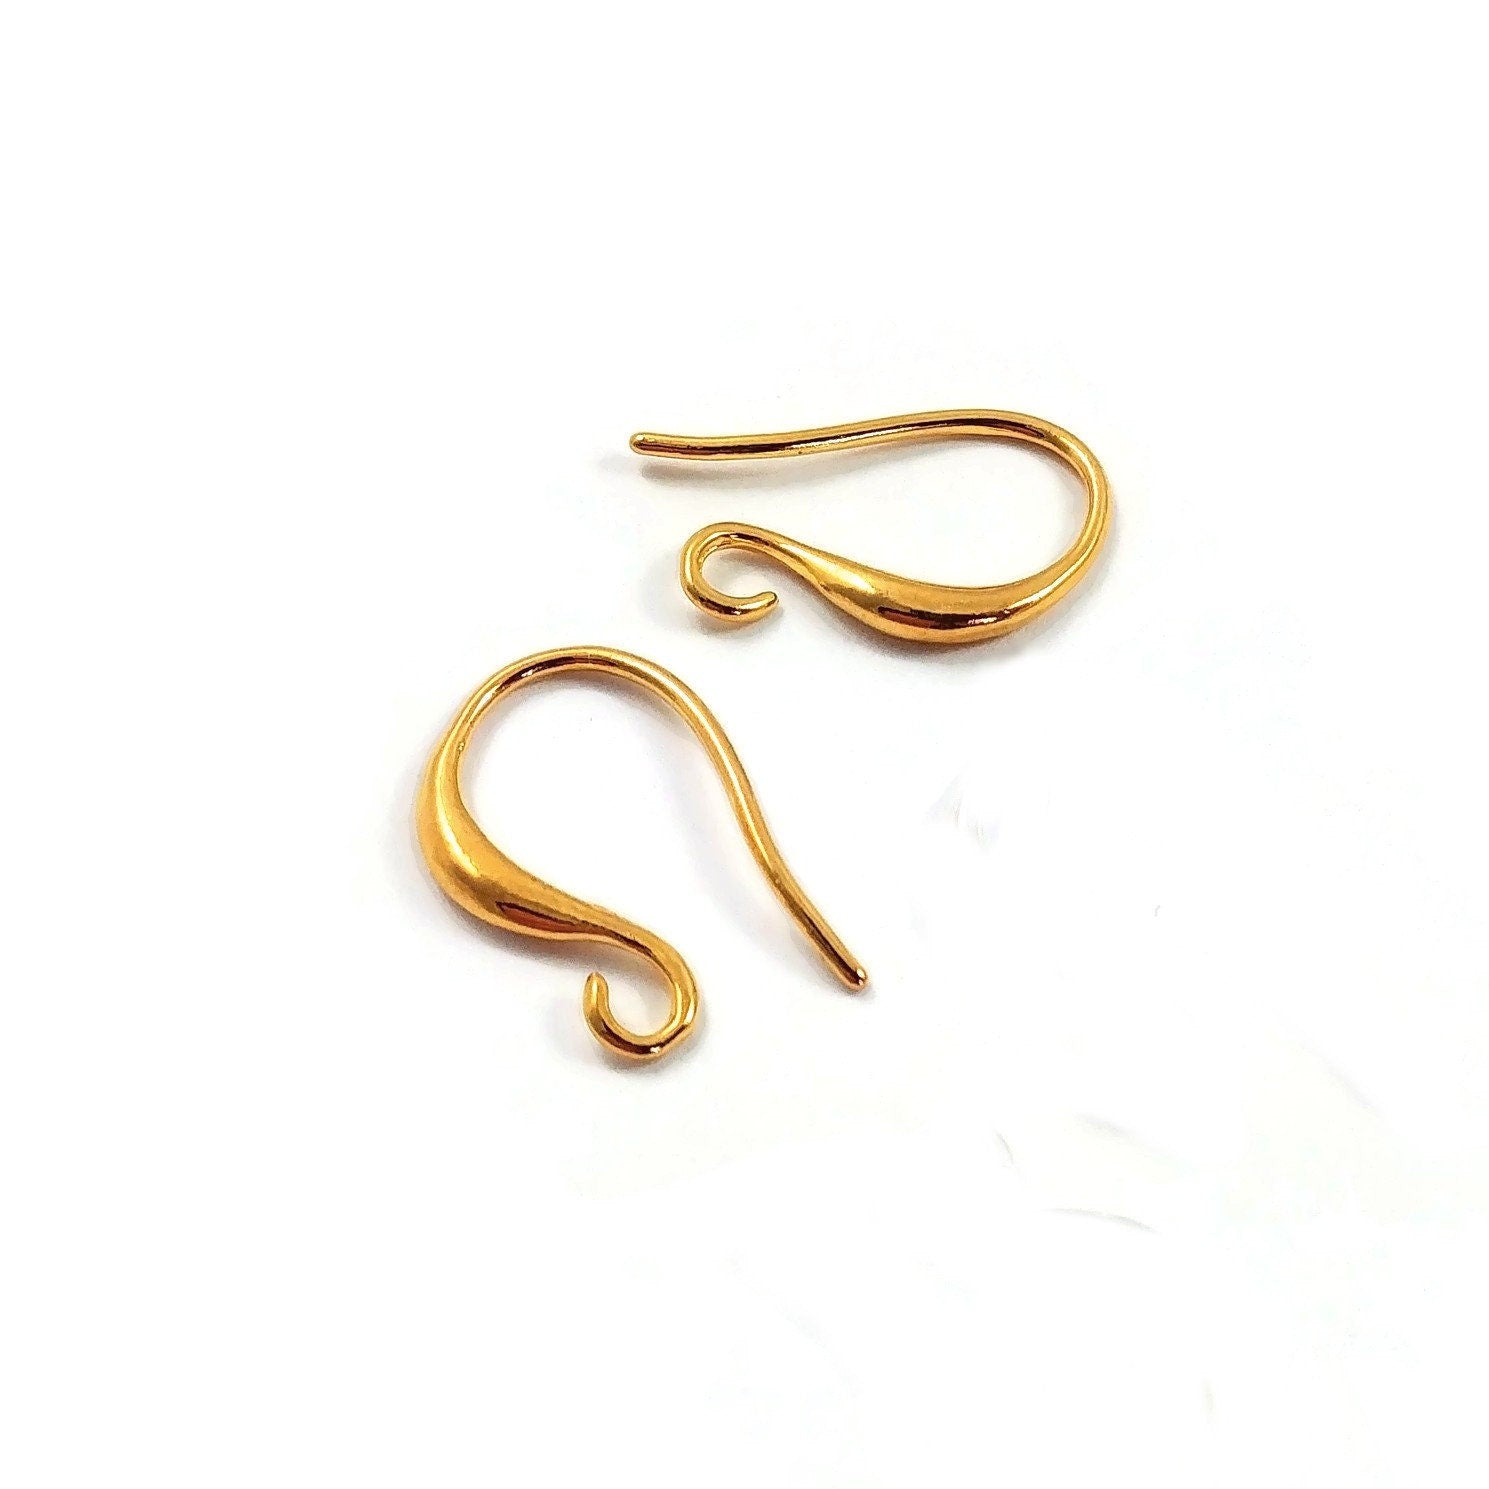 3 Types 14k Gold Plated Brass Metal Earring Hooks DIY Jewelry